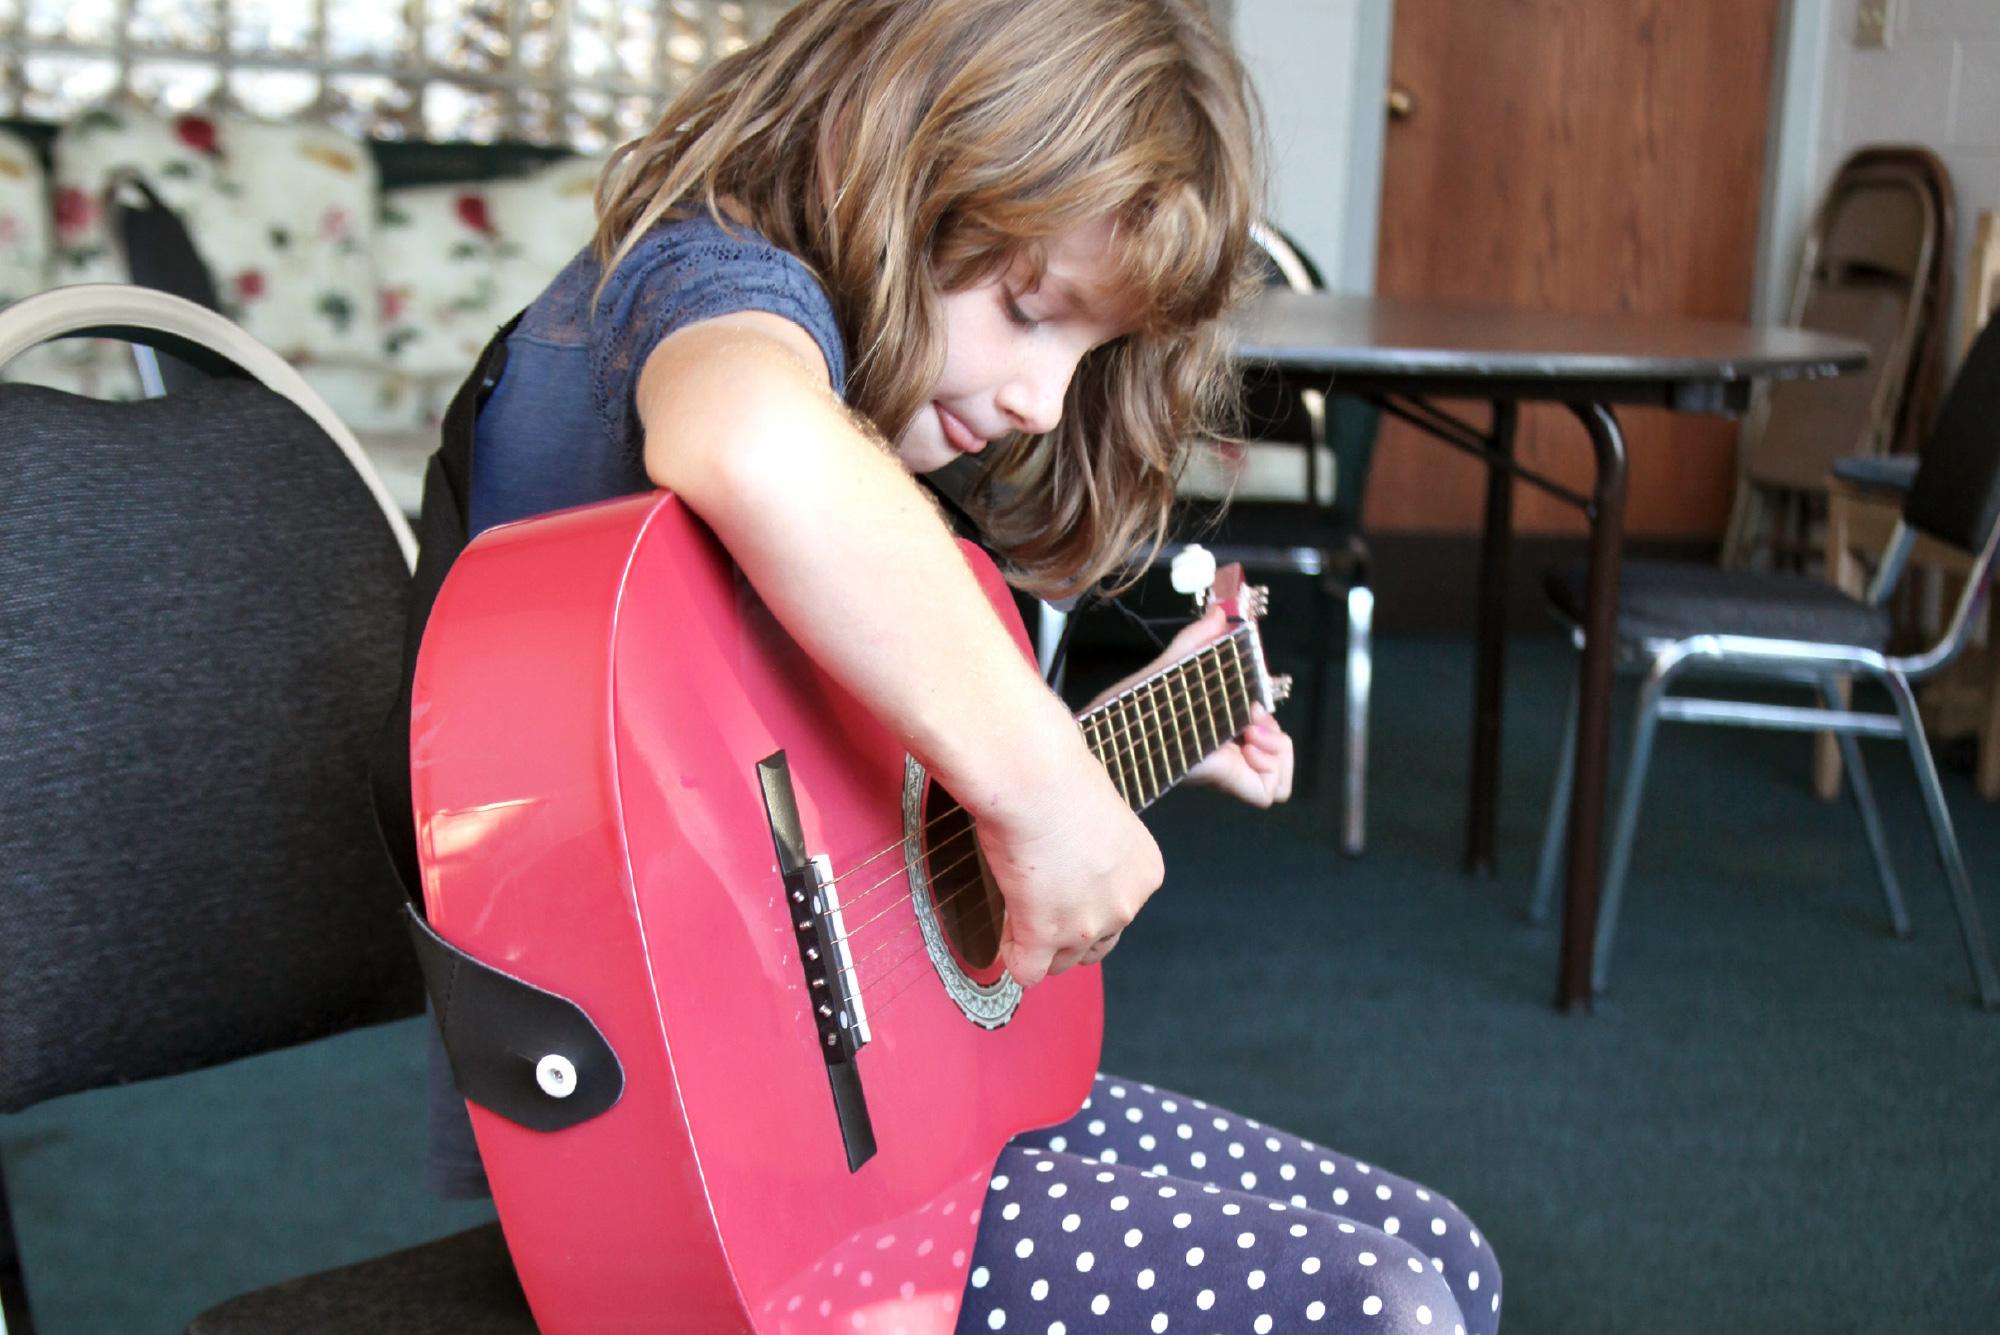 A young girl plays a pink guitar.